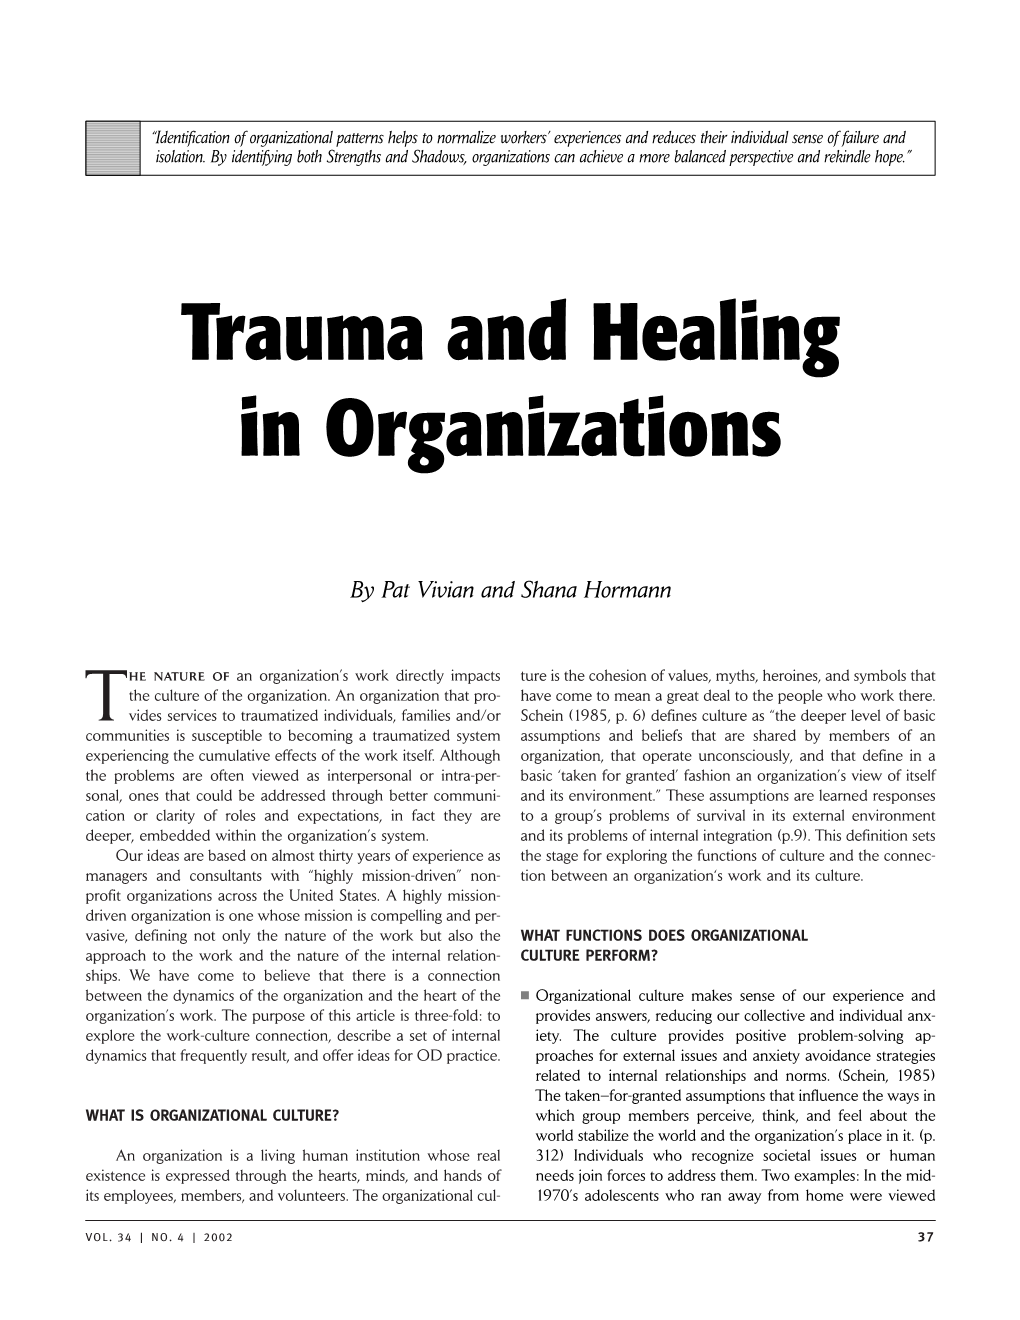 Trauma and Healing in Organizations